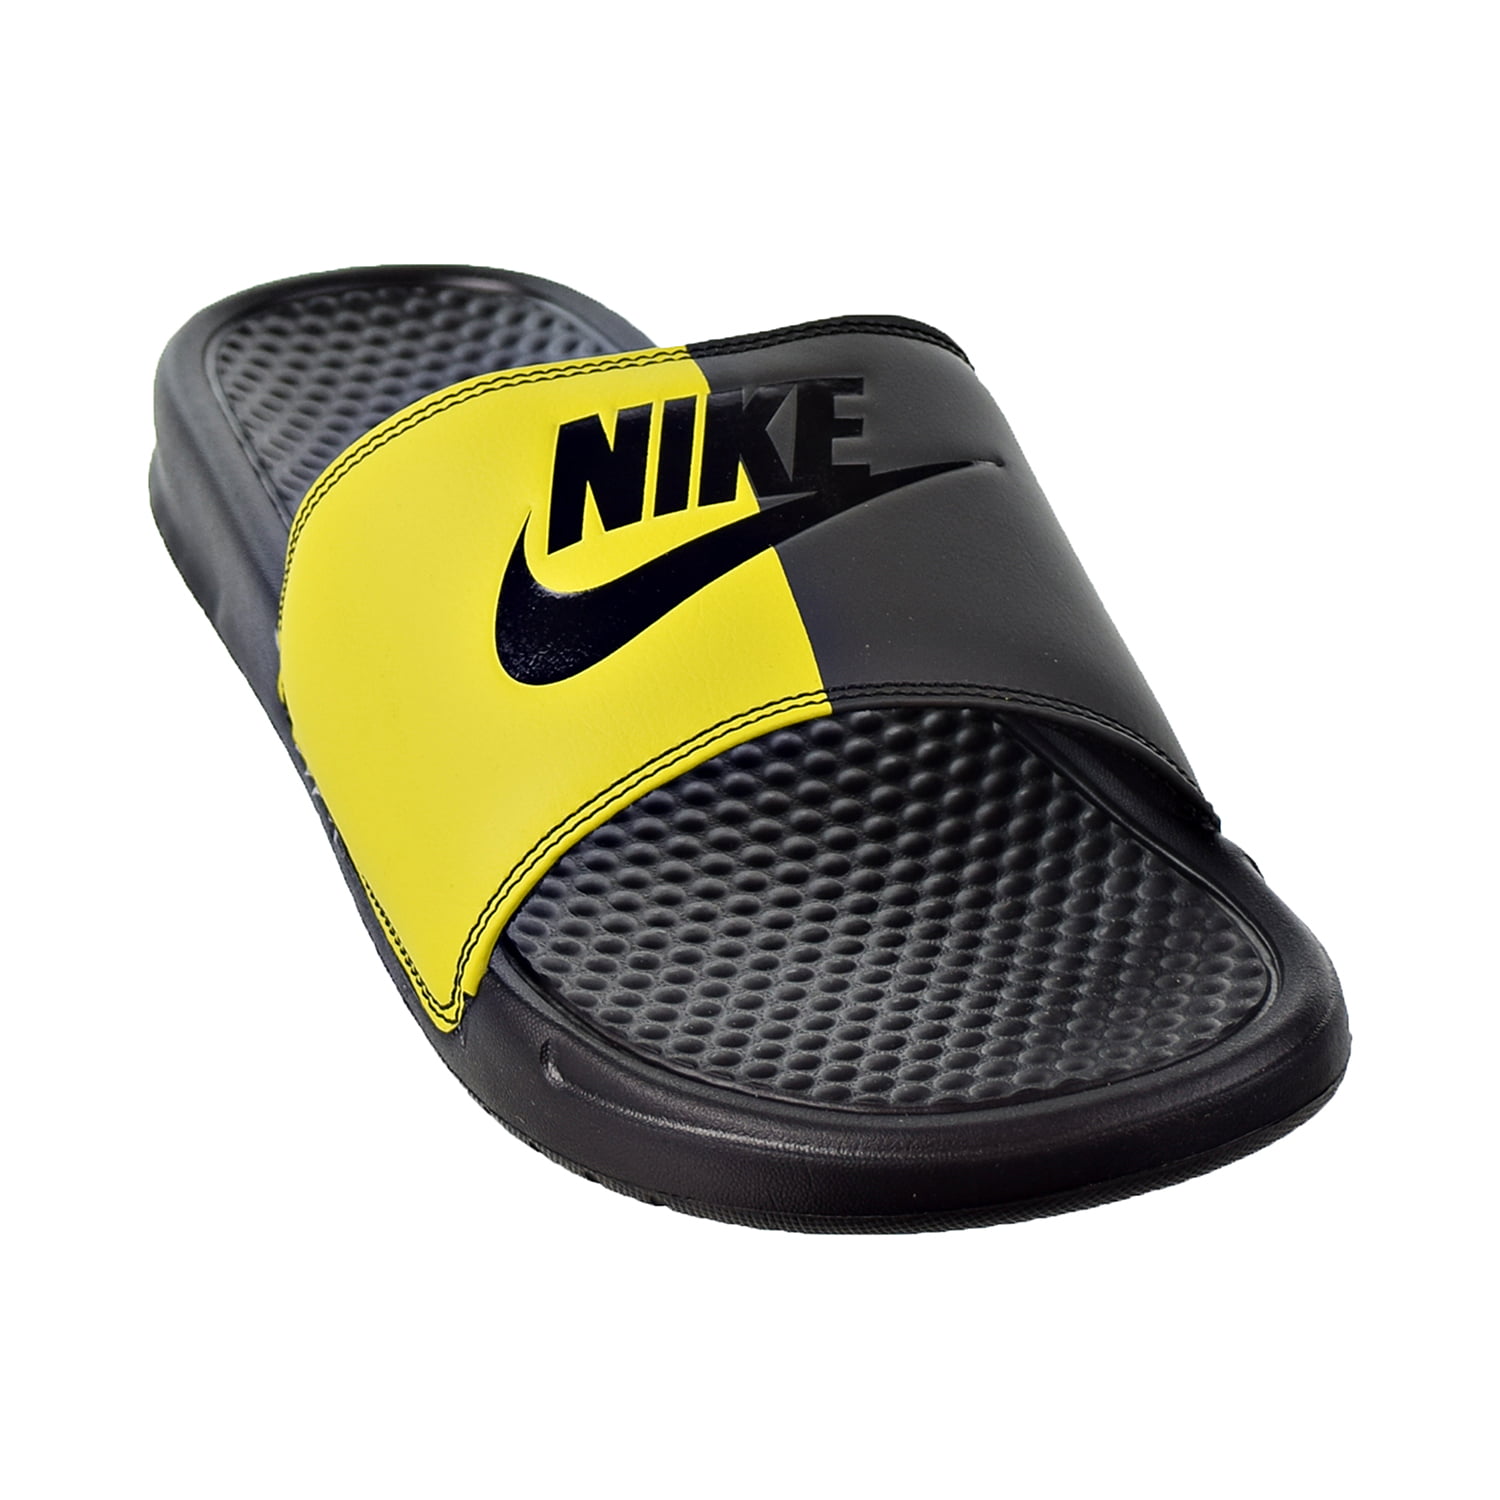 angst momentum Serrated Nike Benassi JDI Men's Slides Black-Bright Citron 343880-017 - Walmart.com